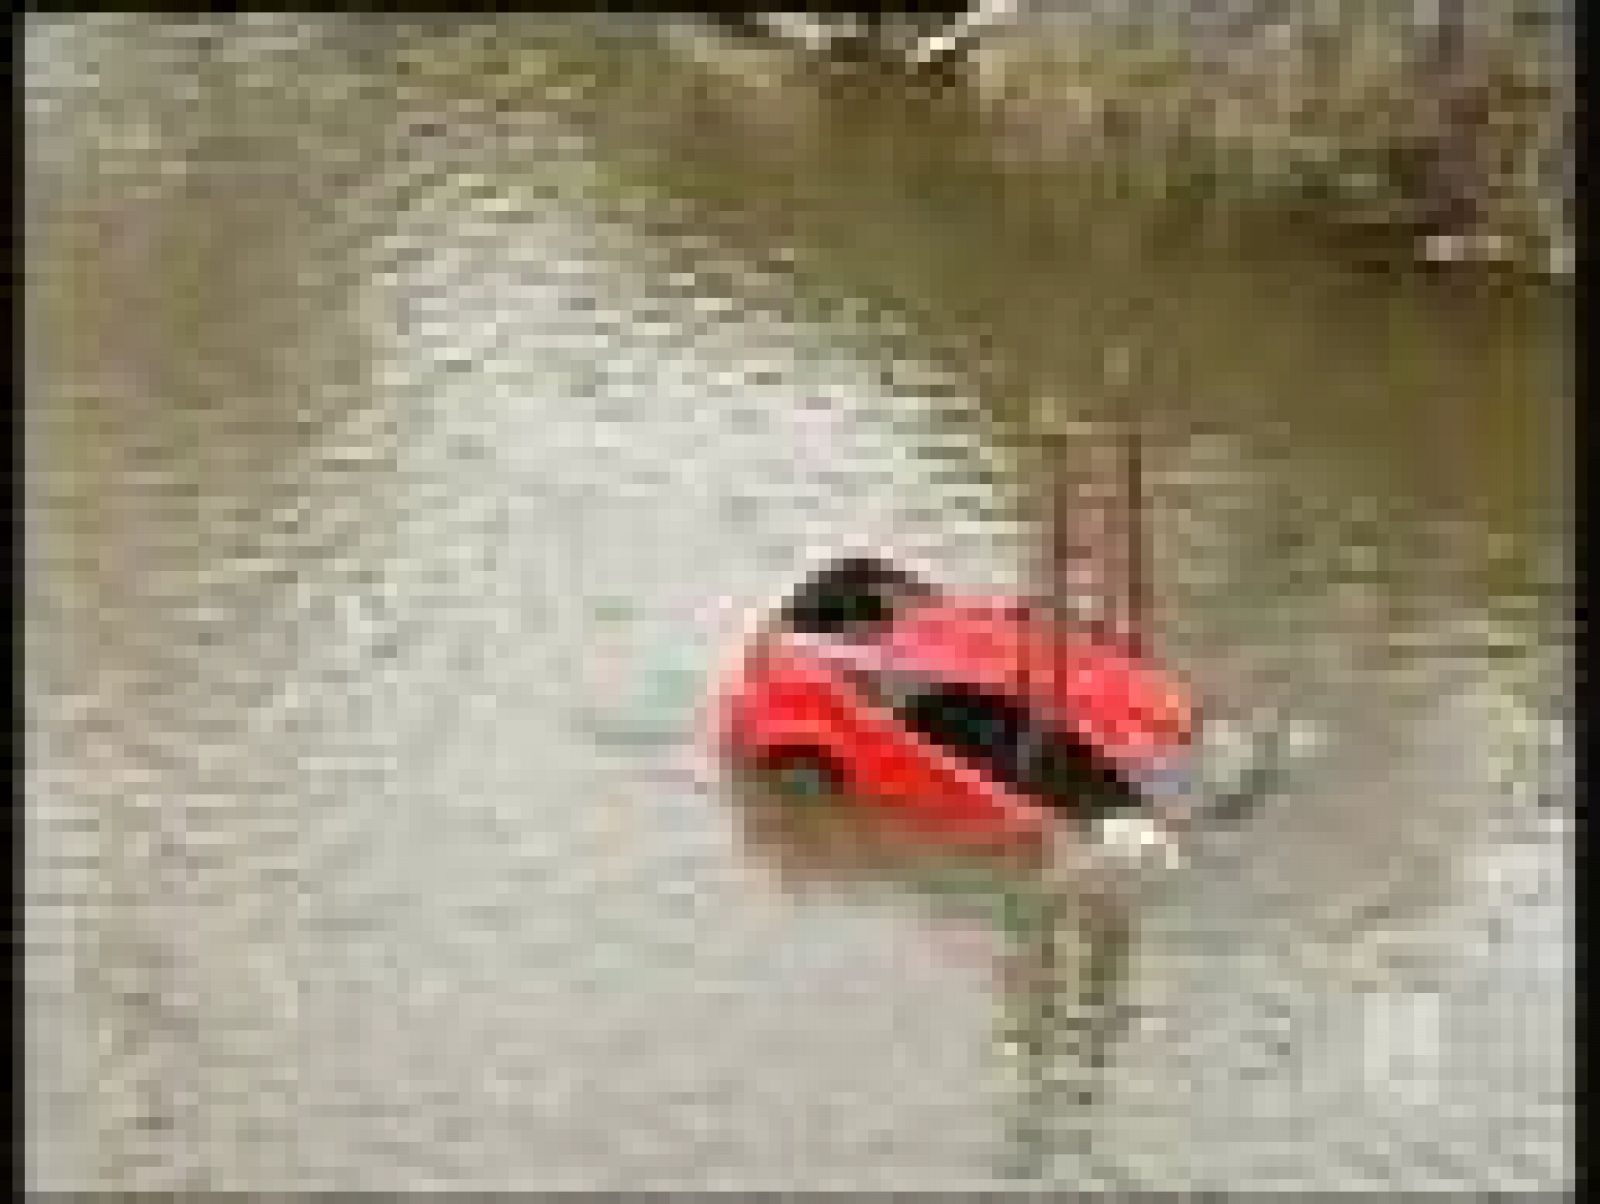 Sin programa: Un vehículo se precipita al río Duero en Zamora | RTVE Play